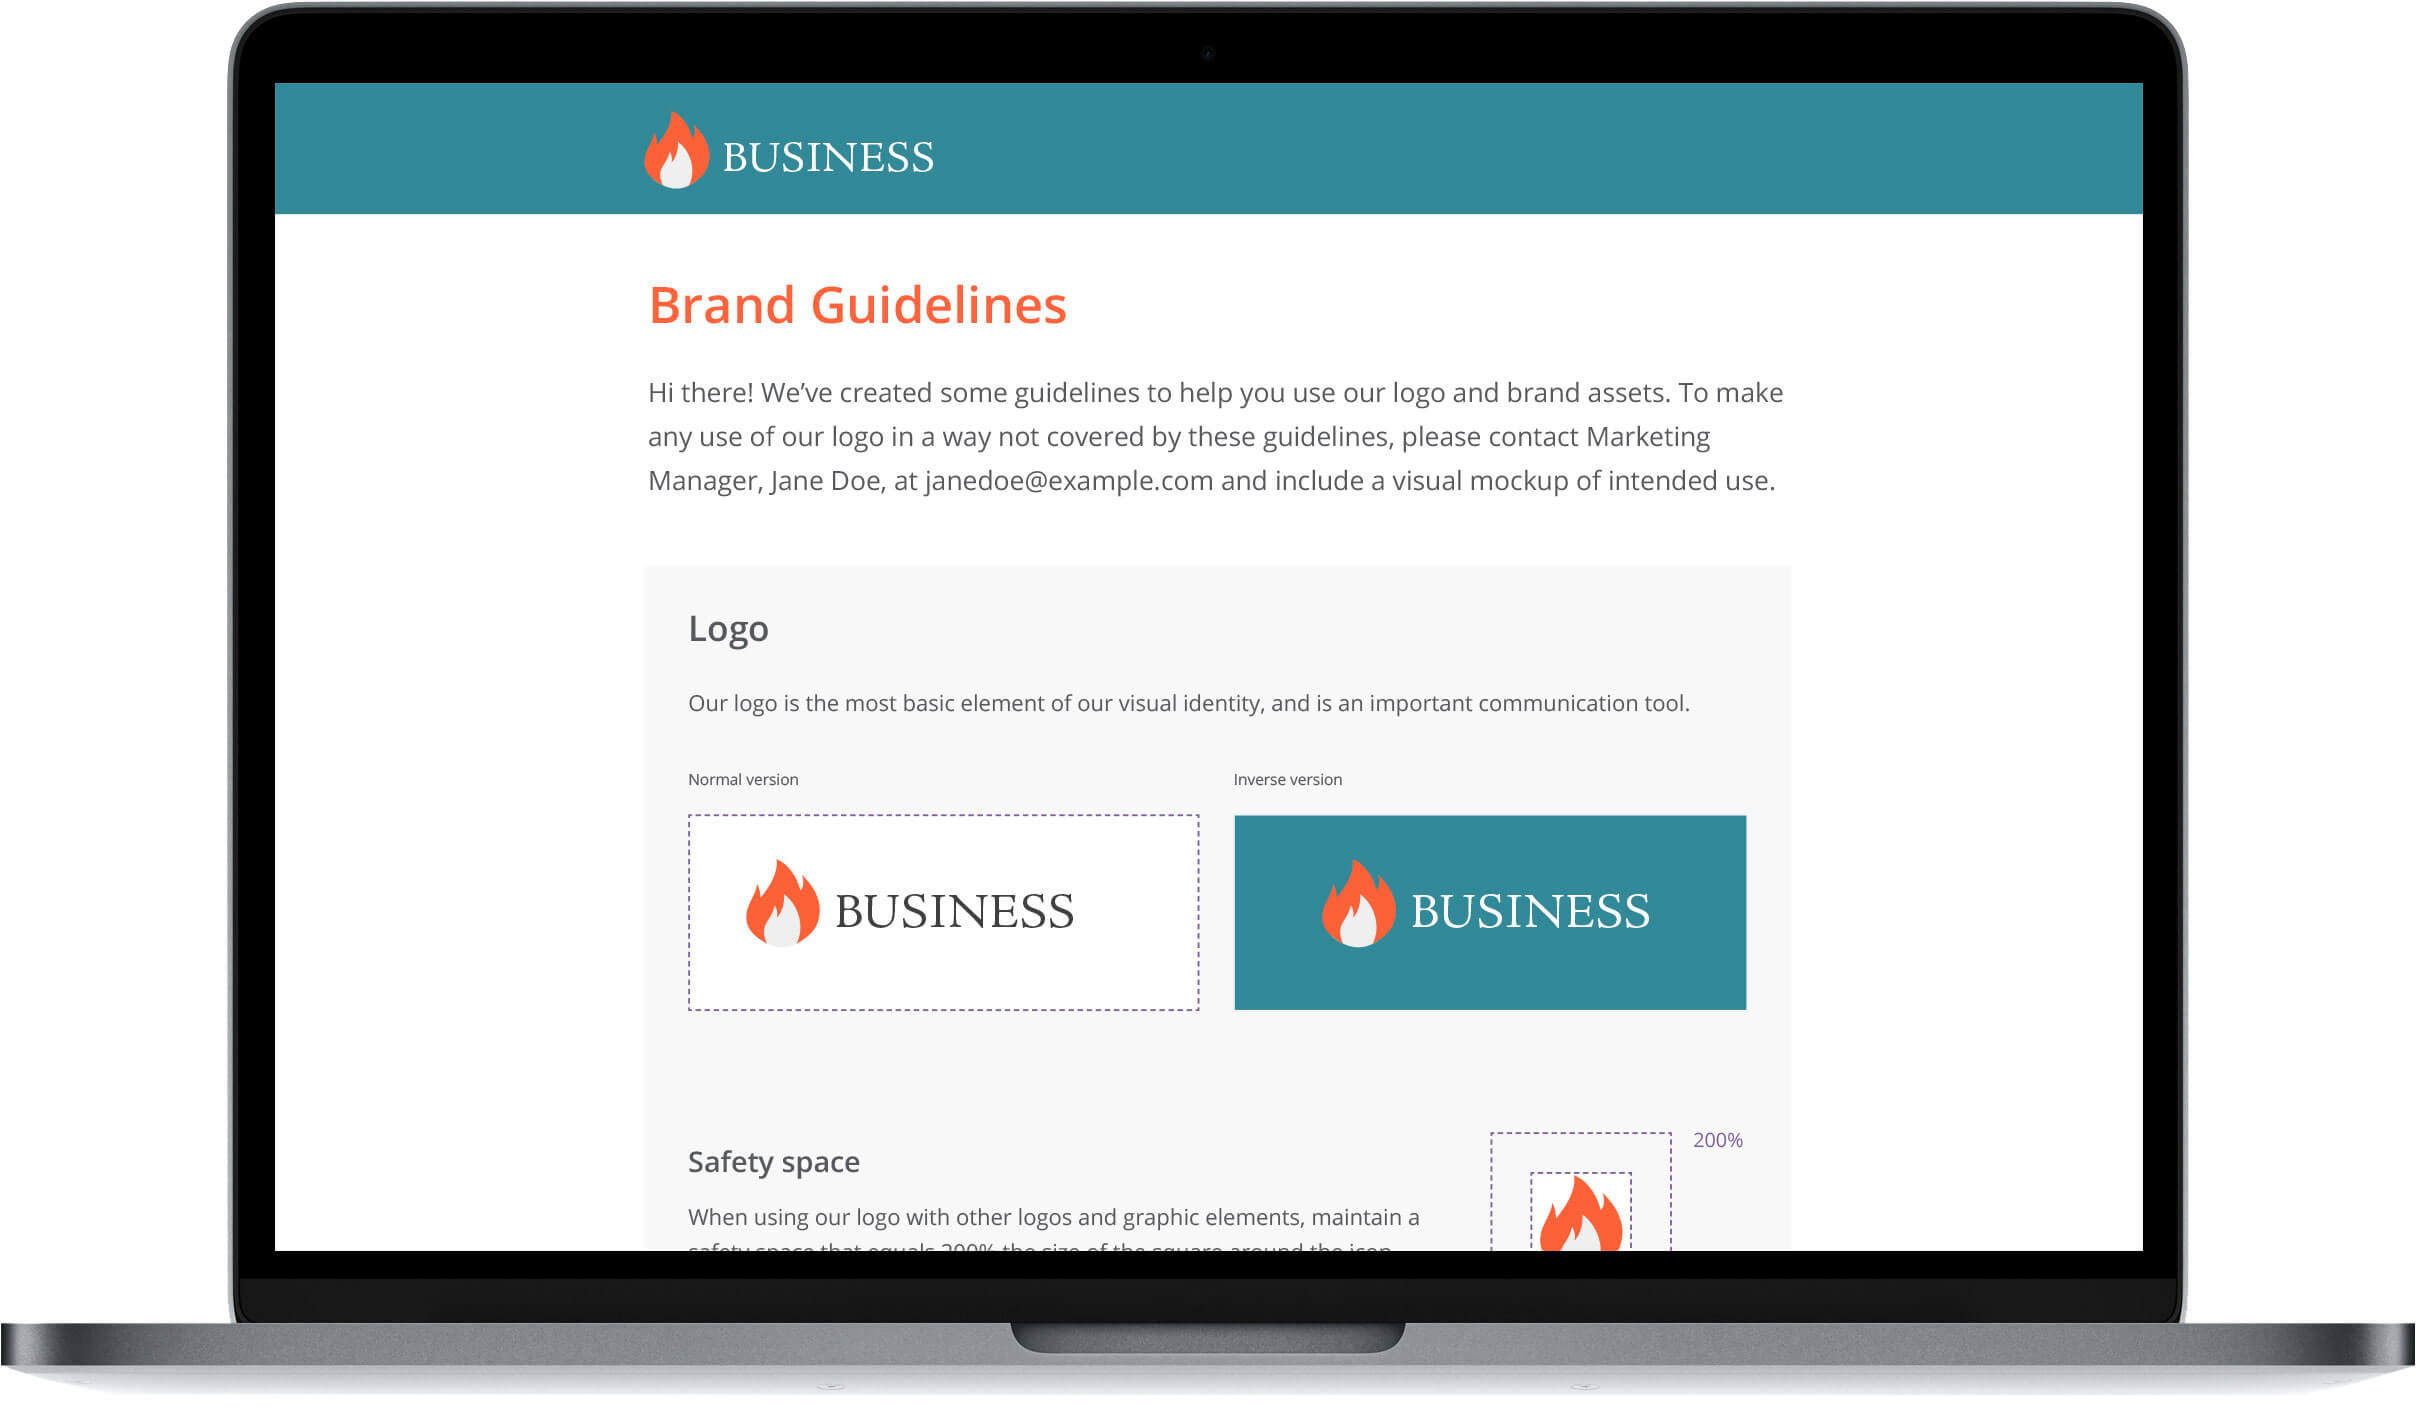 Filecamp - brand guidelines